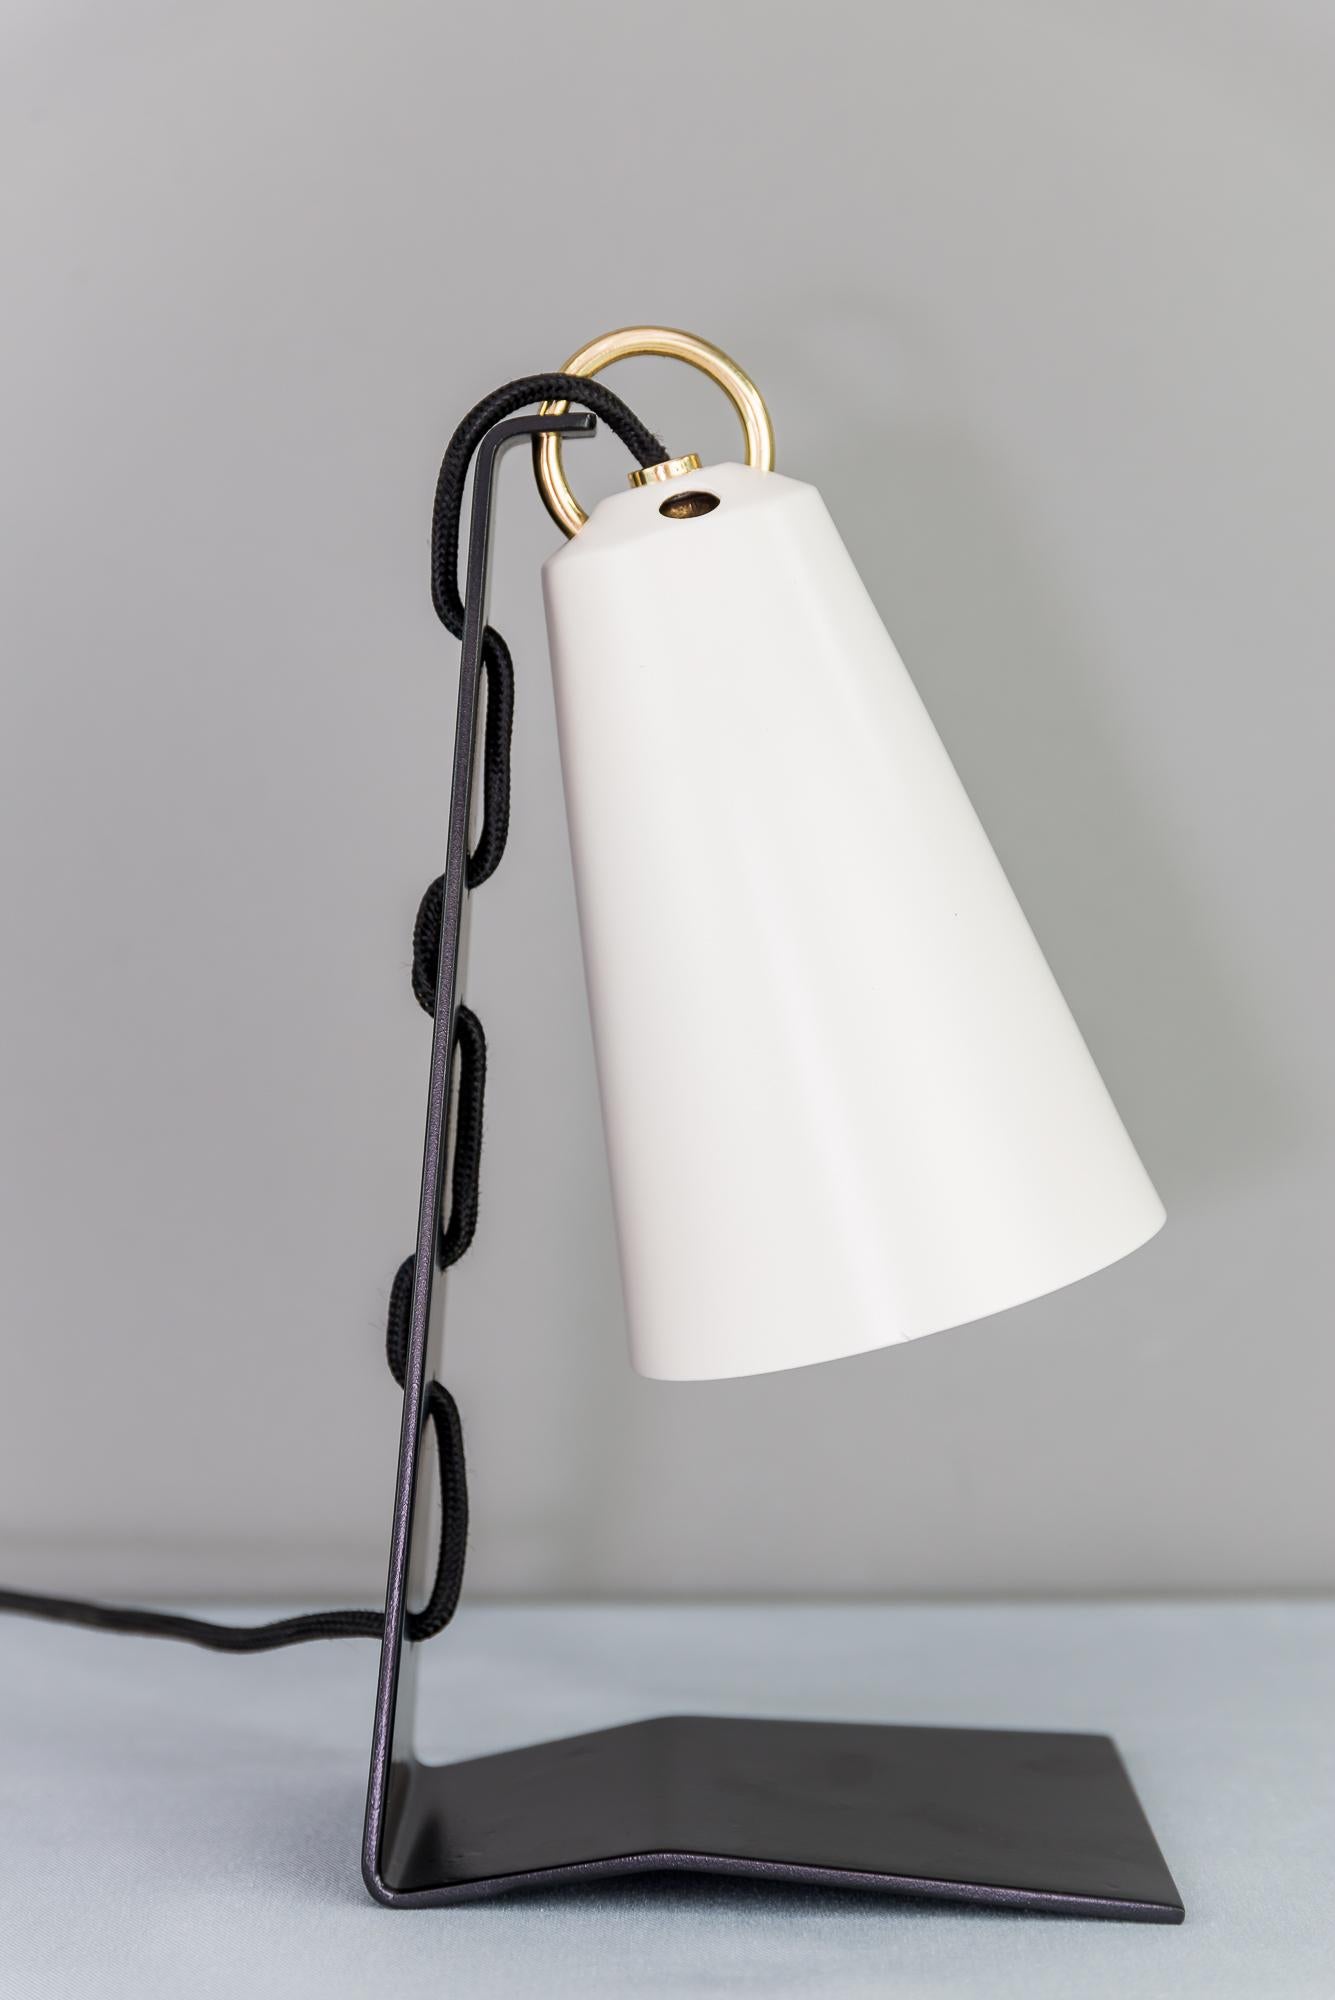 Blackened Black and White Austrian Modernist Metall Table Lamp Hook by J. T. Kalmar 1960s For Sale